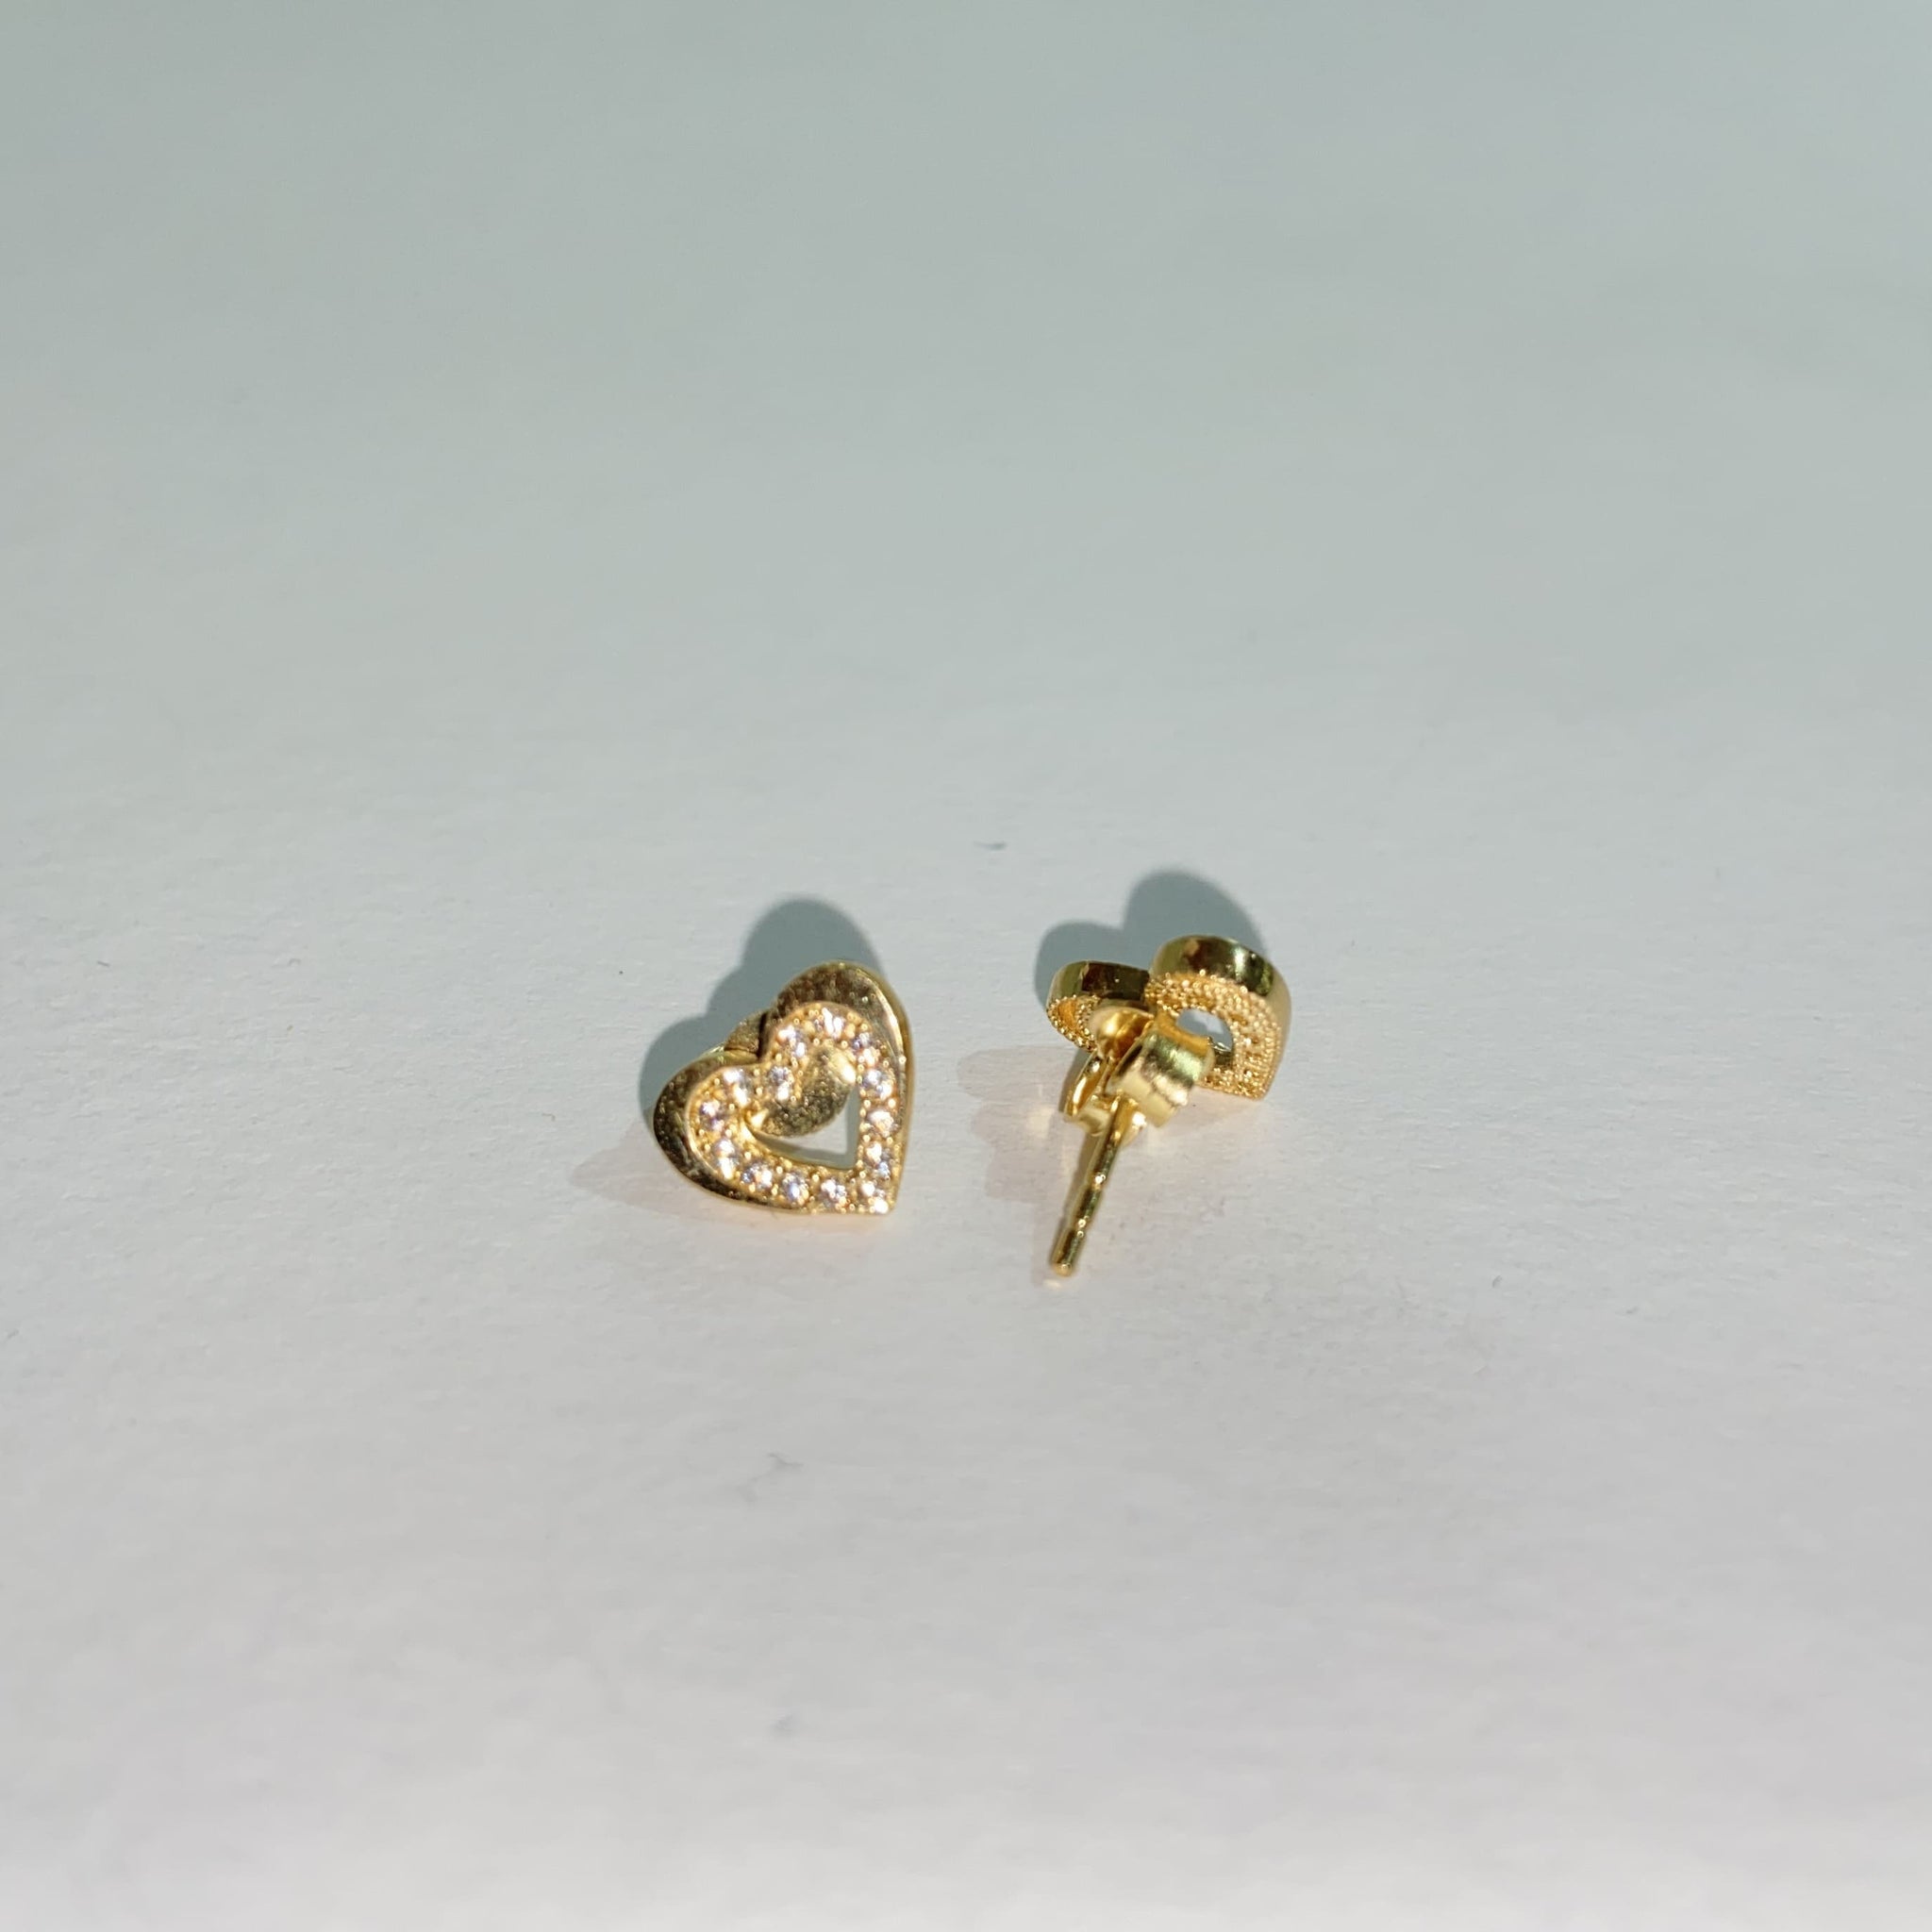 Heart earrings / oorbellen 180 - 14 karaat